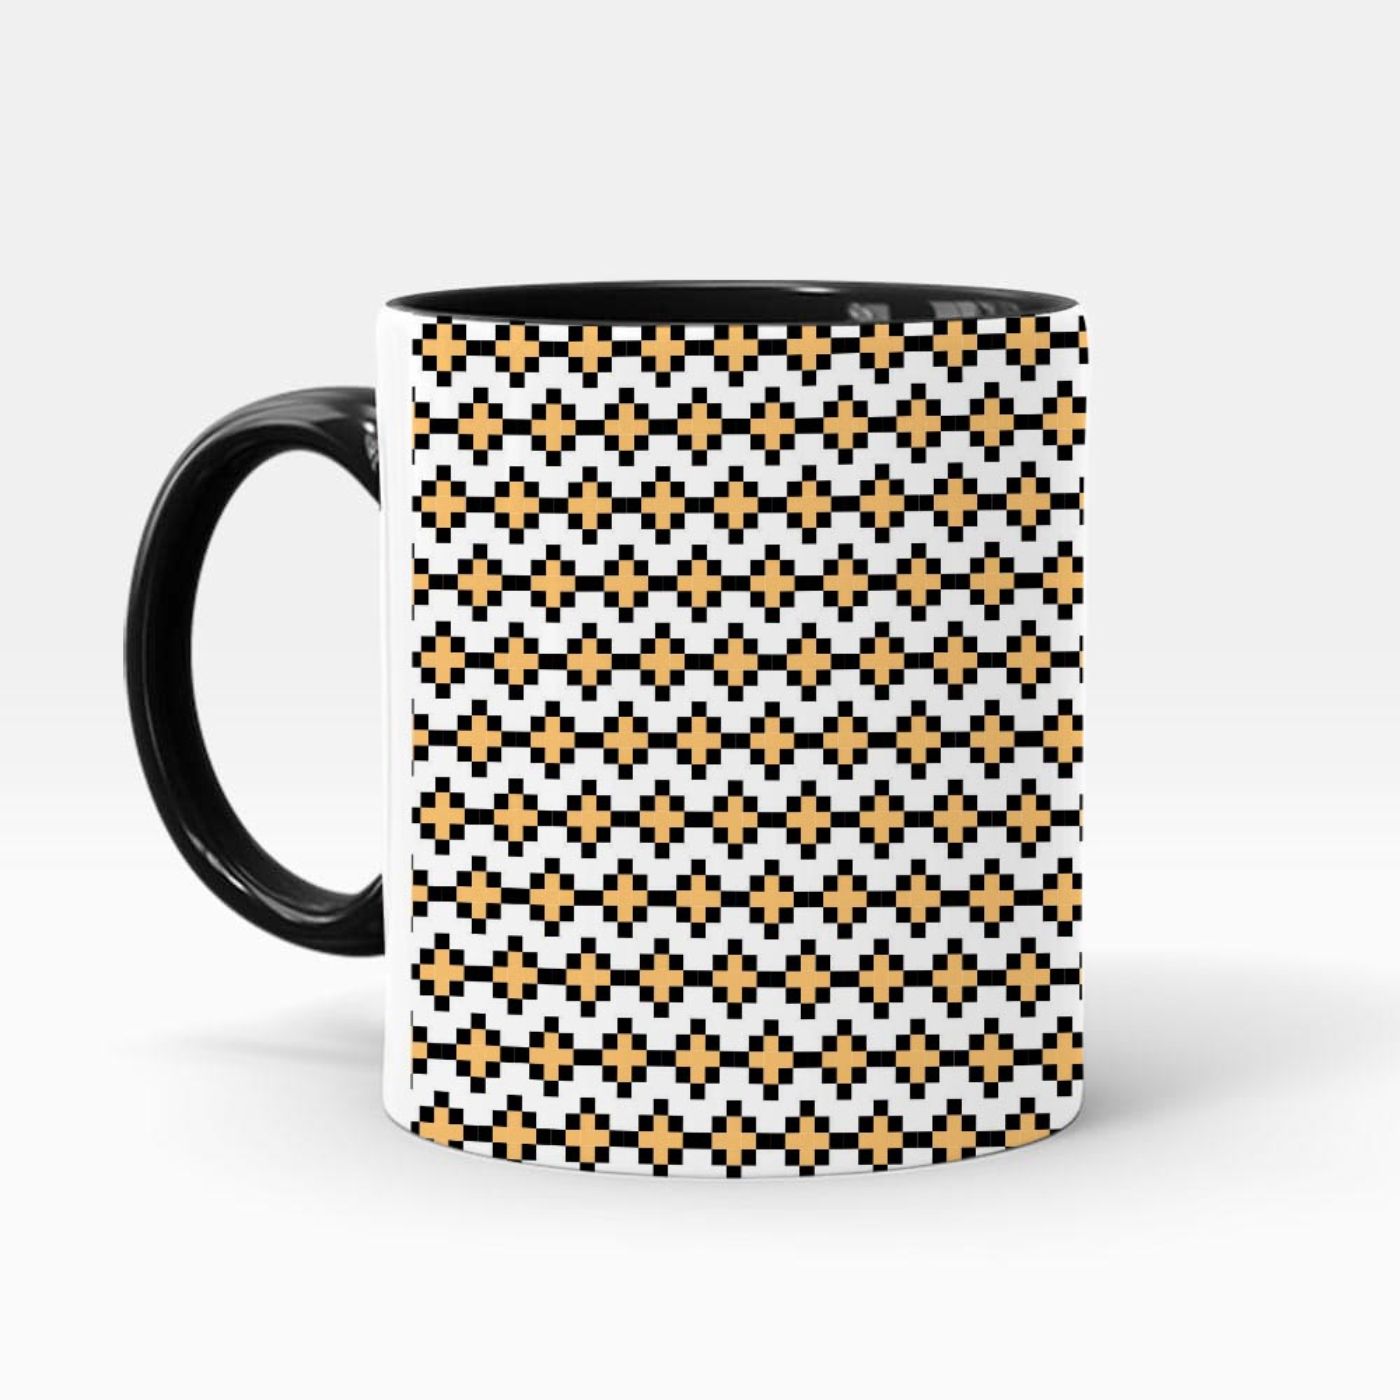 Orka Digital Pritned Theme 48 Coffee Mug   